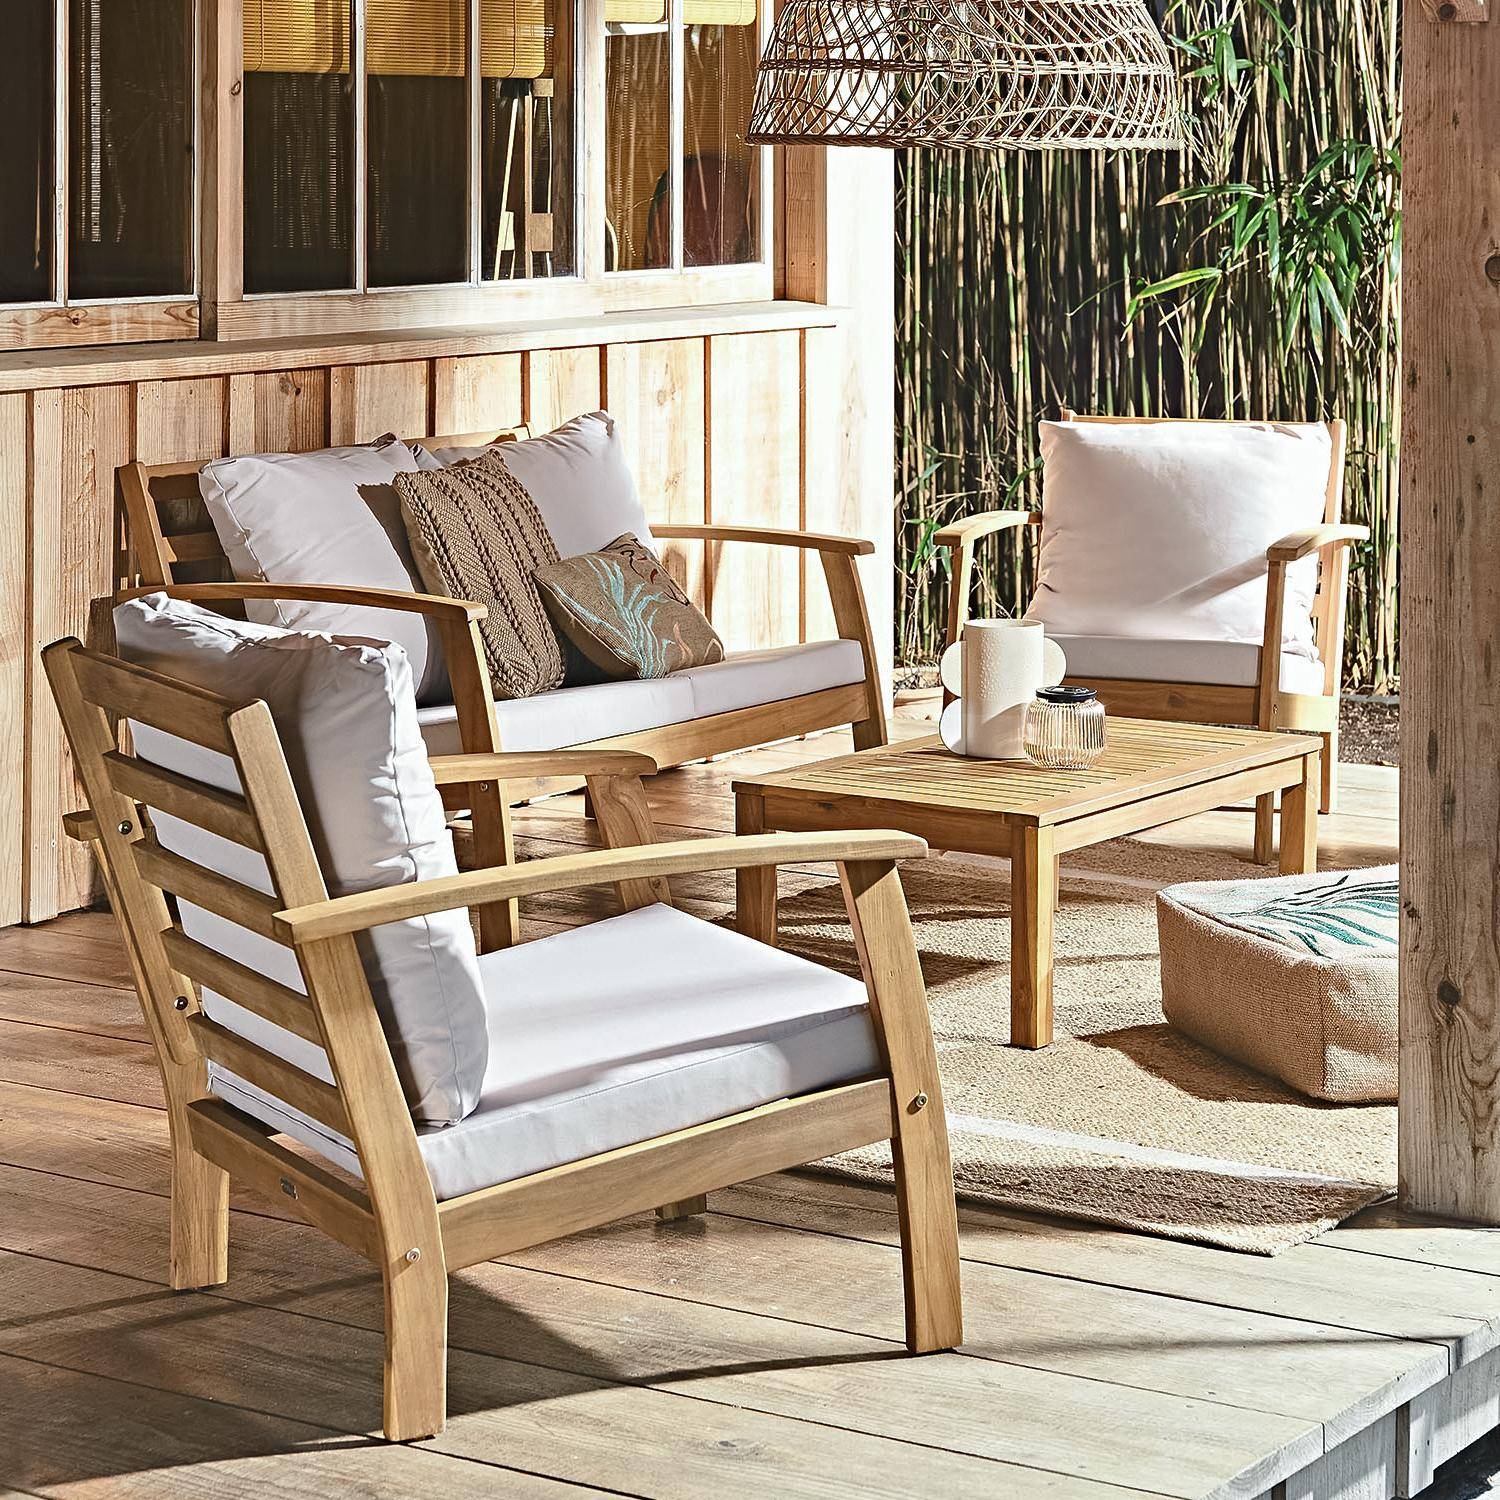 4-seater wooden garden sofa - Acacia wood sofa, armchairs and coffee table, designer piece  - Ushuaia - Off-white Photo1